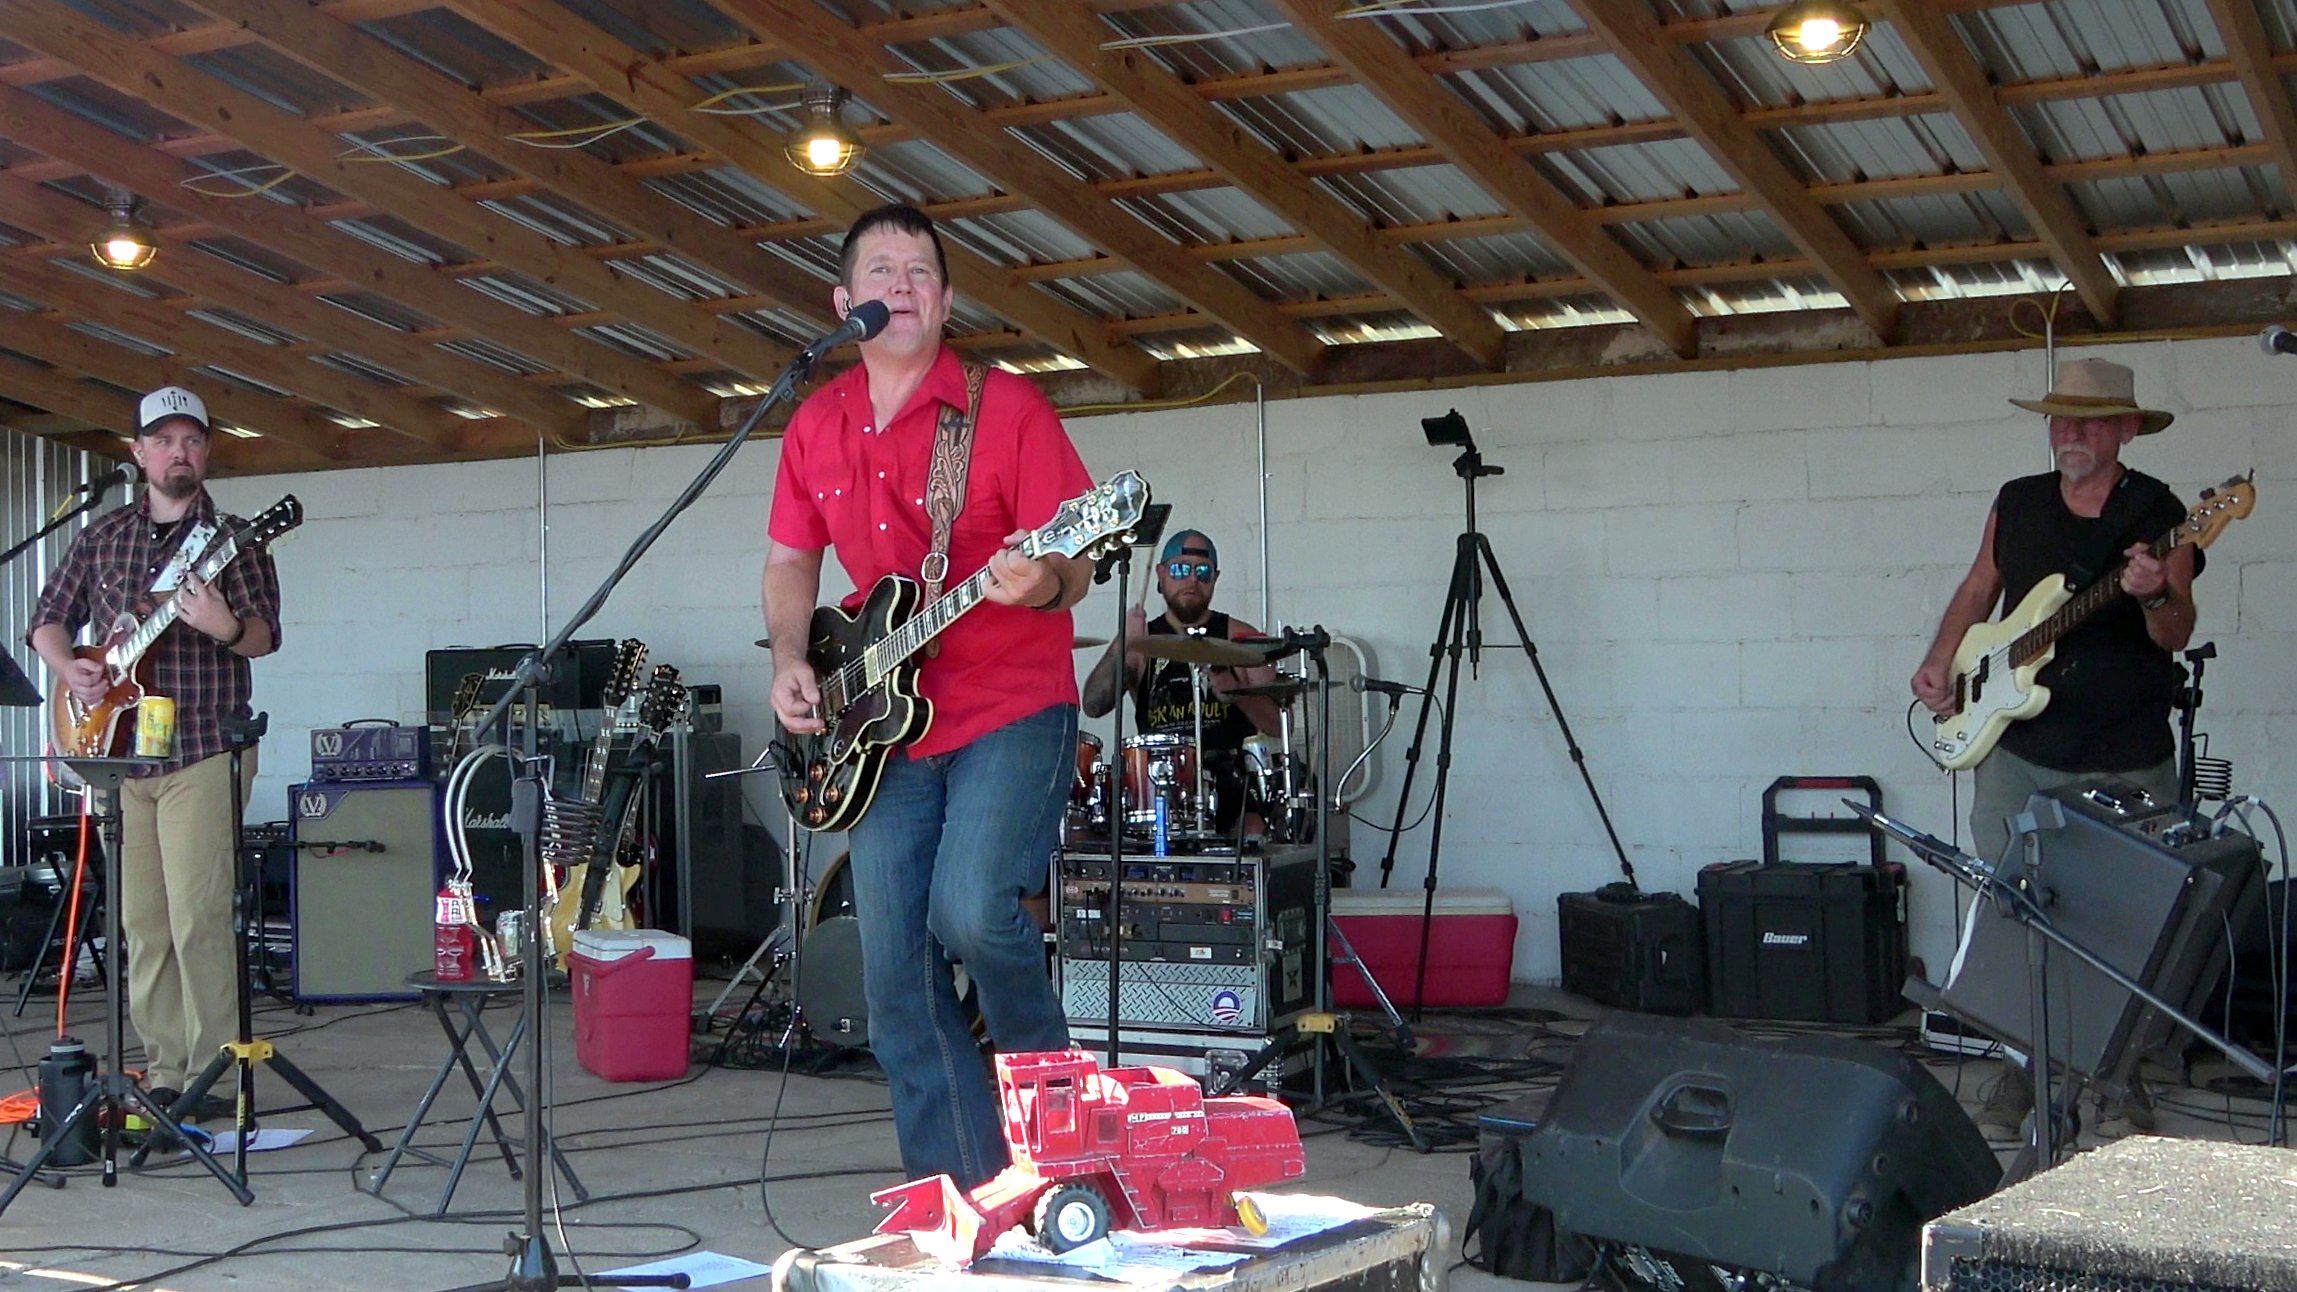 Aaron Traffas Band plays Kansas country music in Kiowa